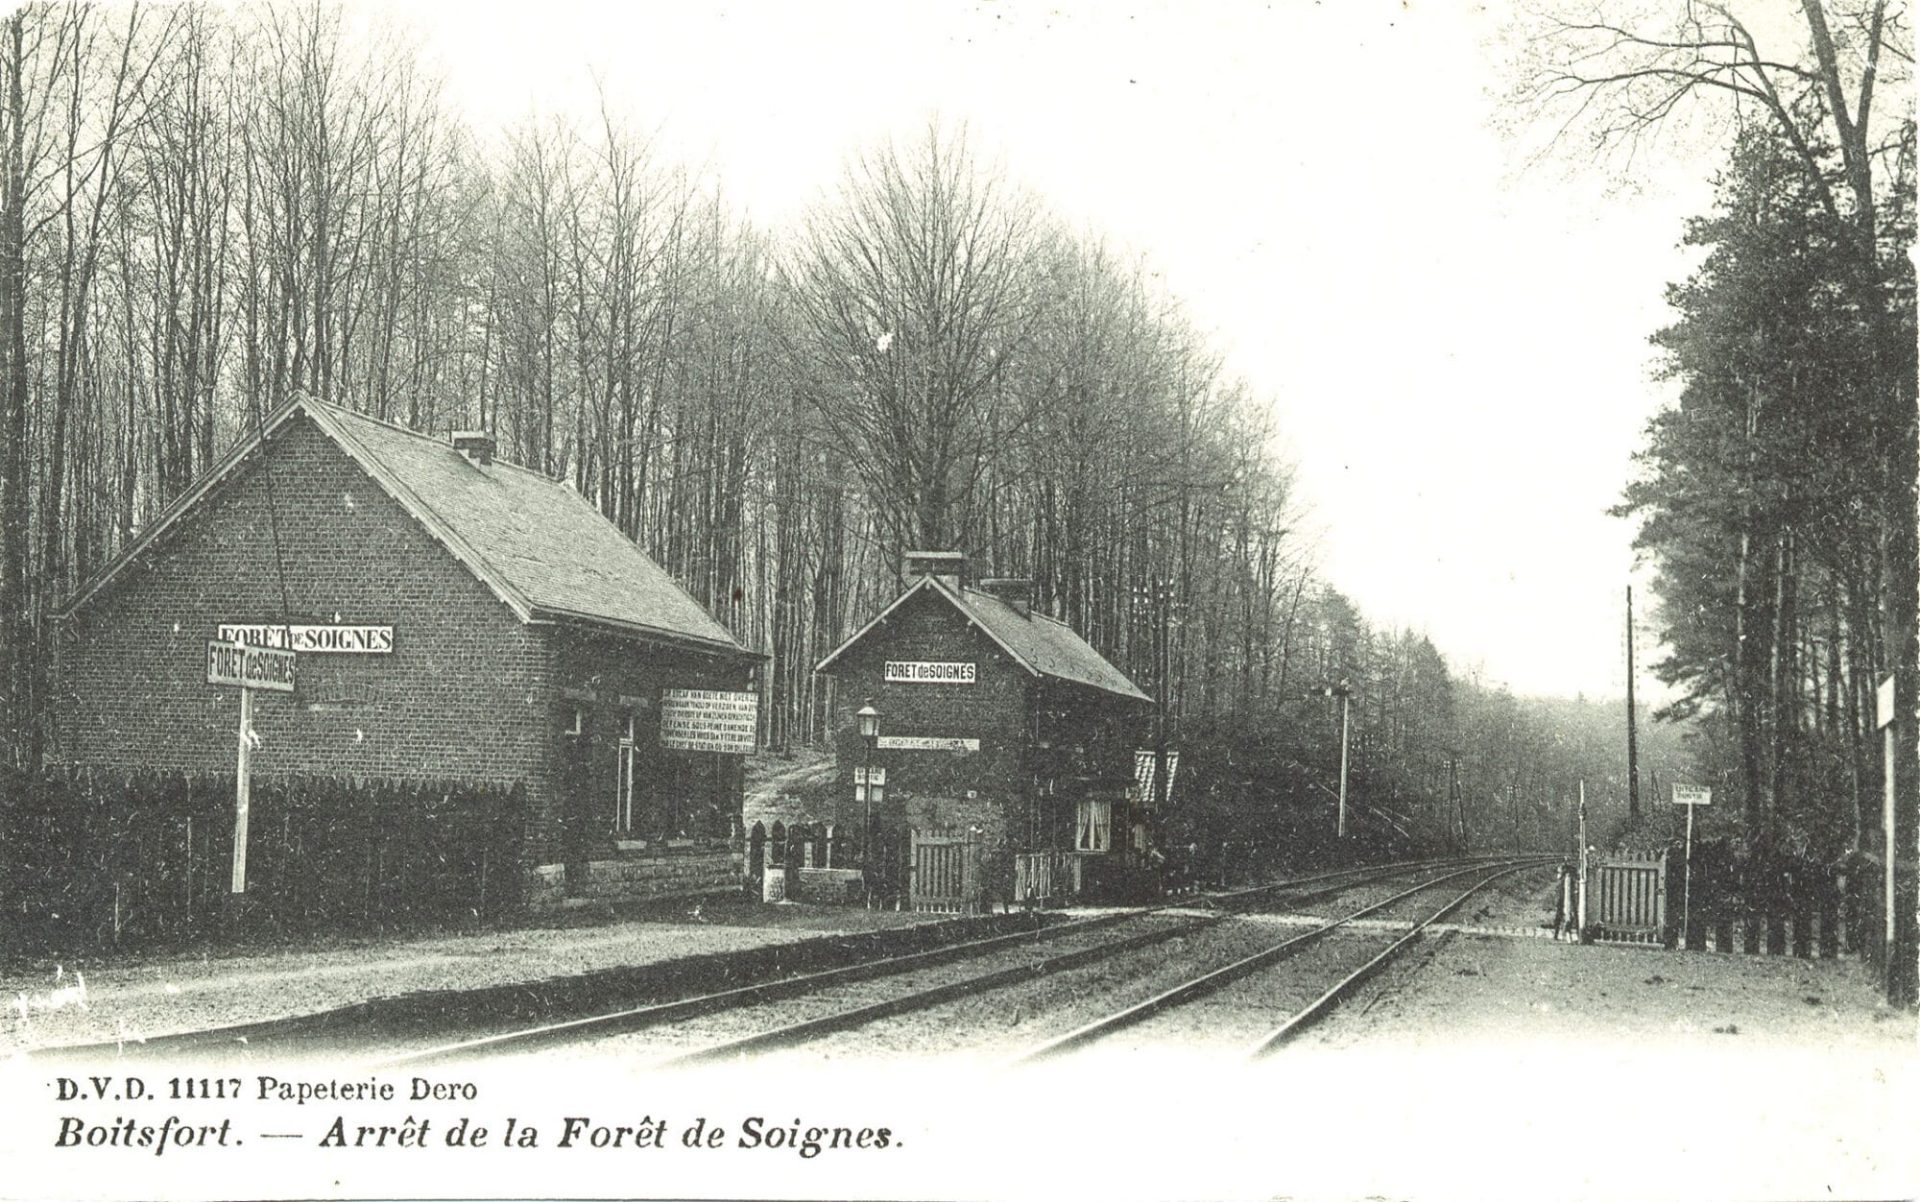 La halte de la forêt de Soignes - Carte postale Dero, vers 1905.